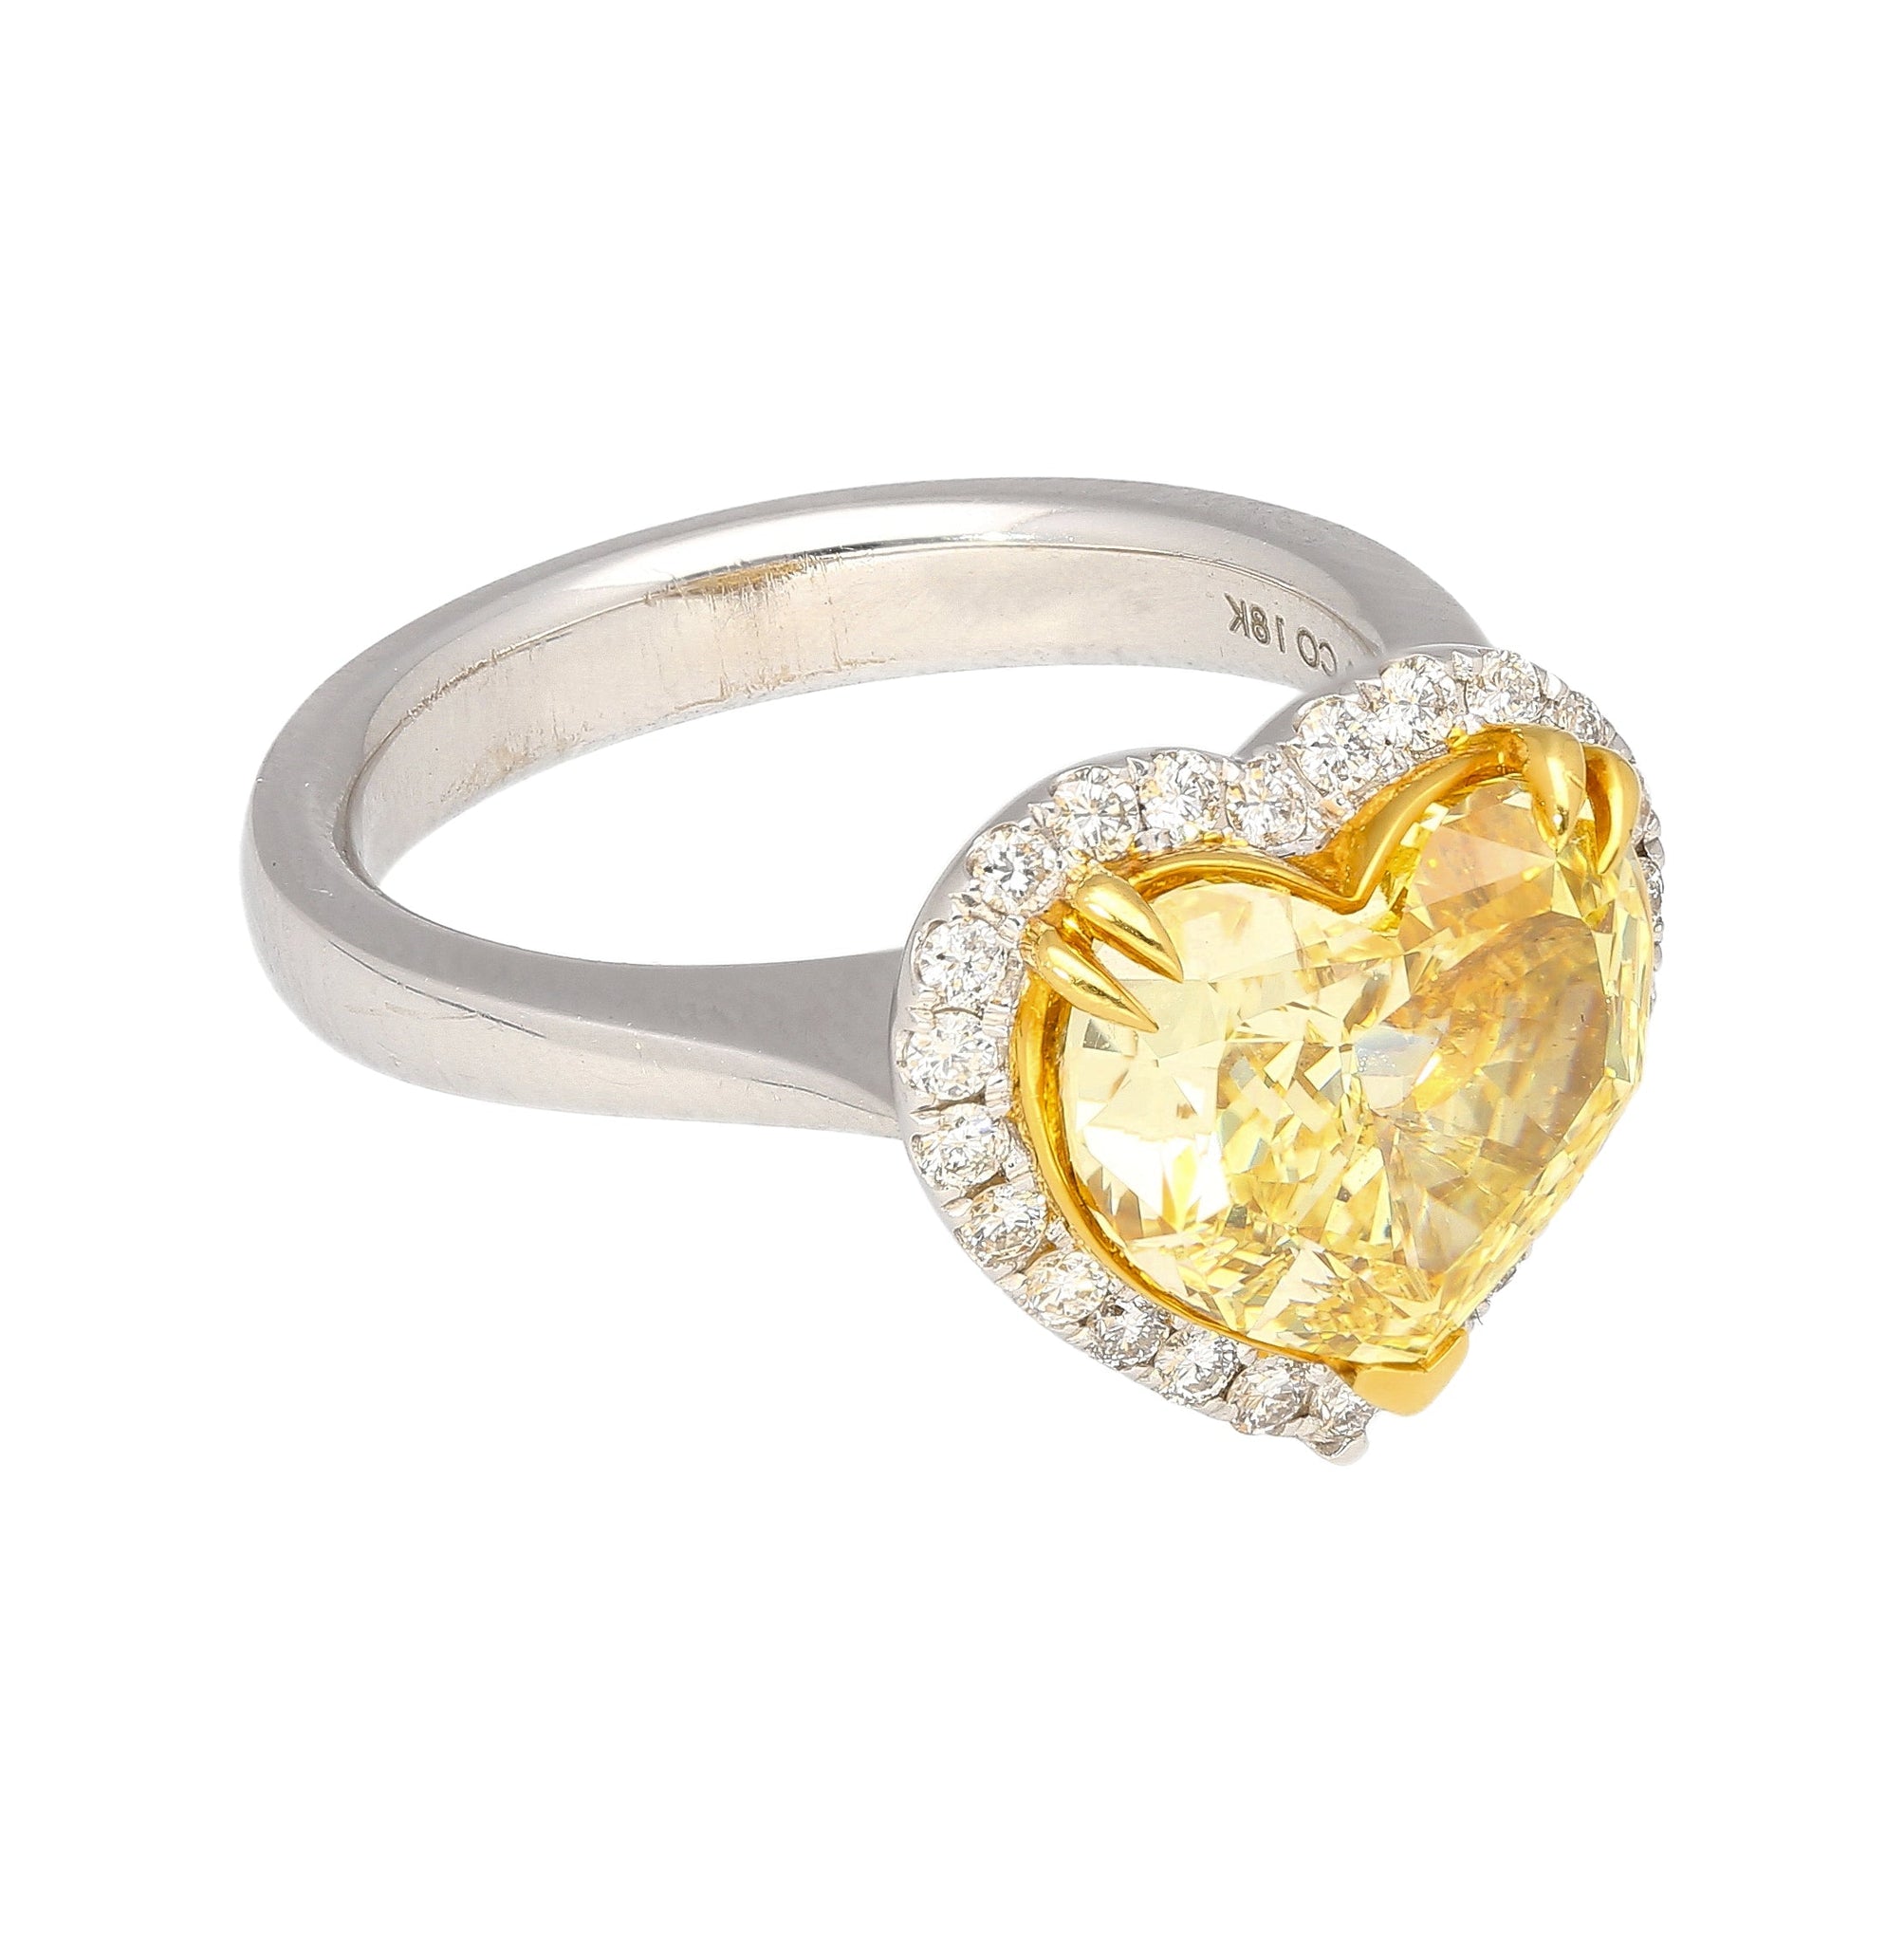 GIA Certified 3.32 Carat Fancy Intense Yellow Heart Cut Diamond Engagement Ring